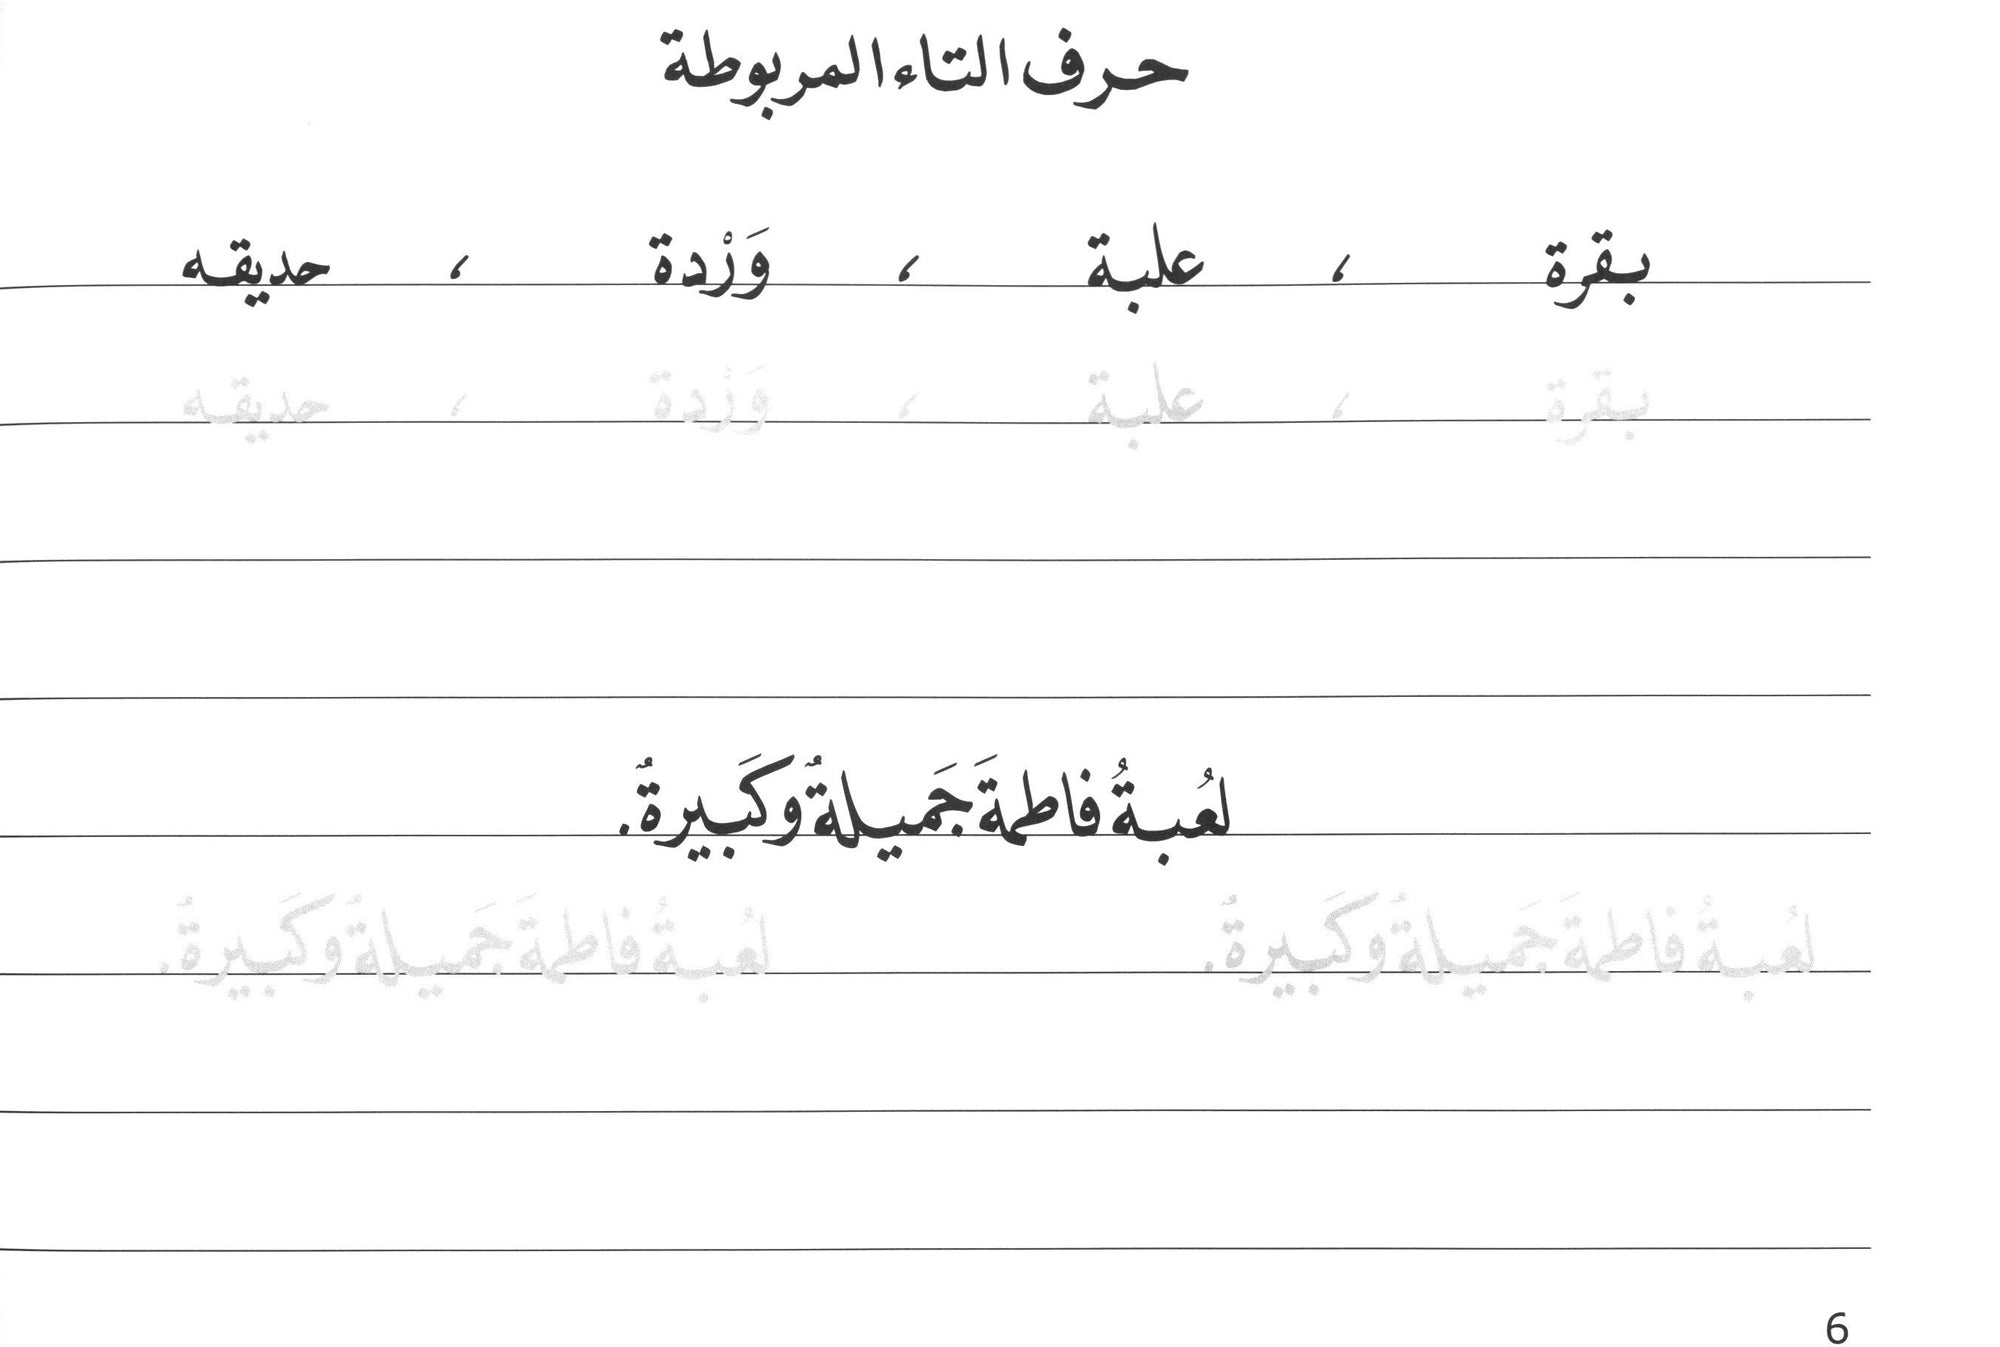 Al-Rowad Arabic Calligraphy Naskh Font Level 2